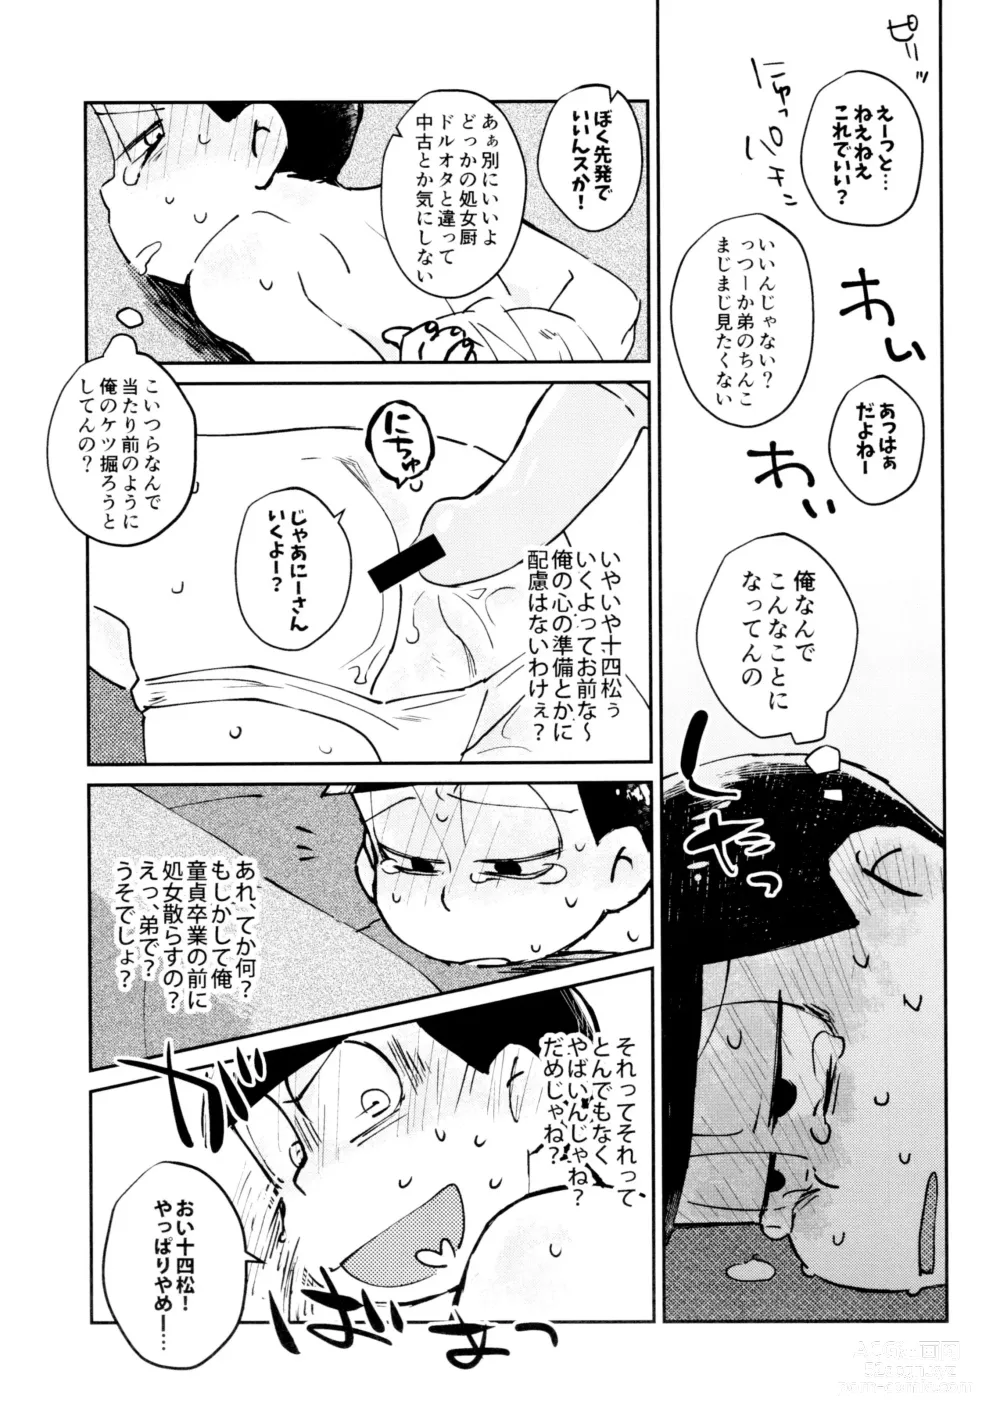 Page 19 of doujinshi Wild Coup dEtat